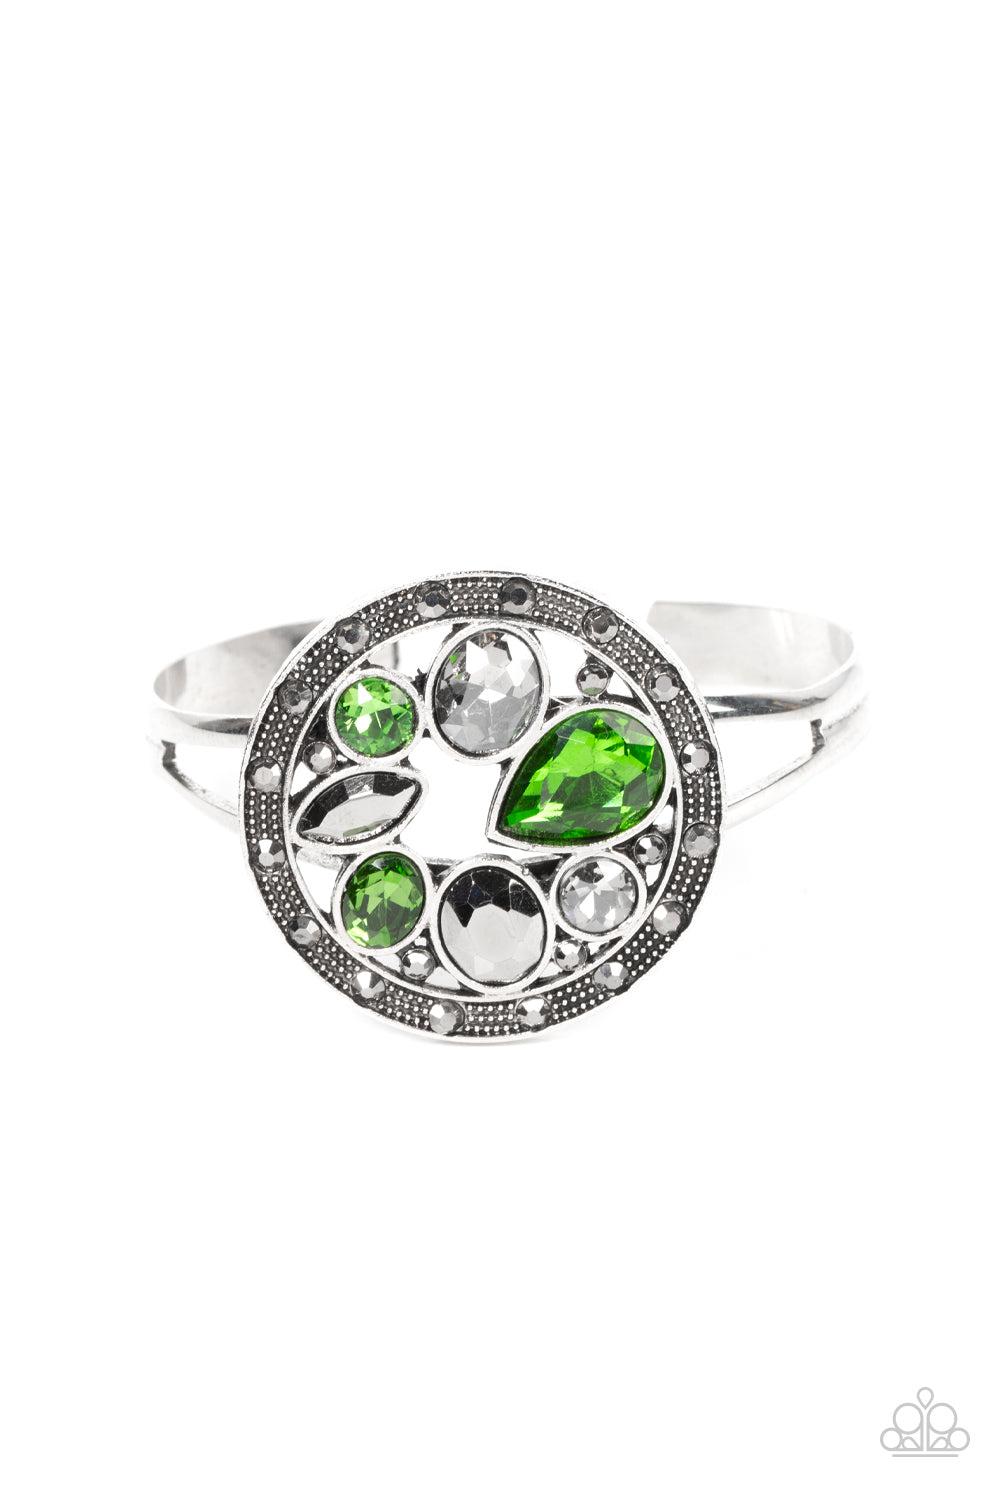 Time to Twinkle Green Rhinestone Cuff Bracelet - Paparazzi Accessories- lightbox - CarasShop.com - $5 Jewelry by Cara Jewels